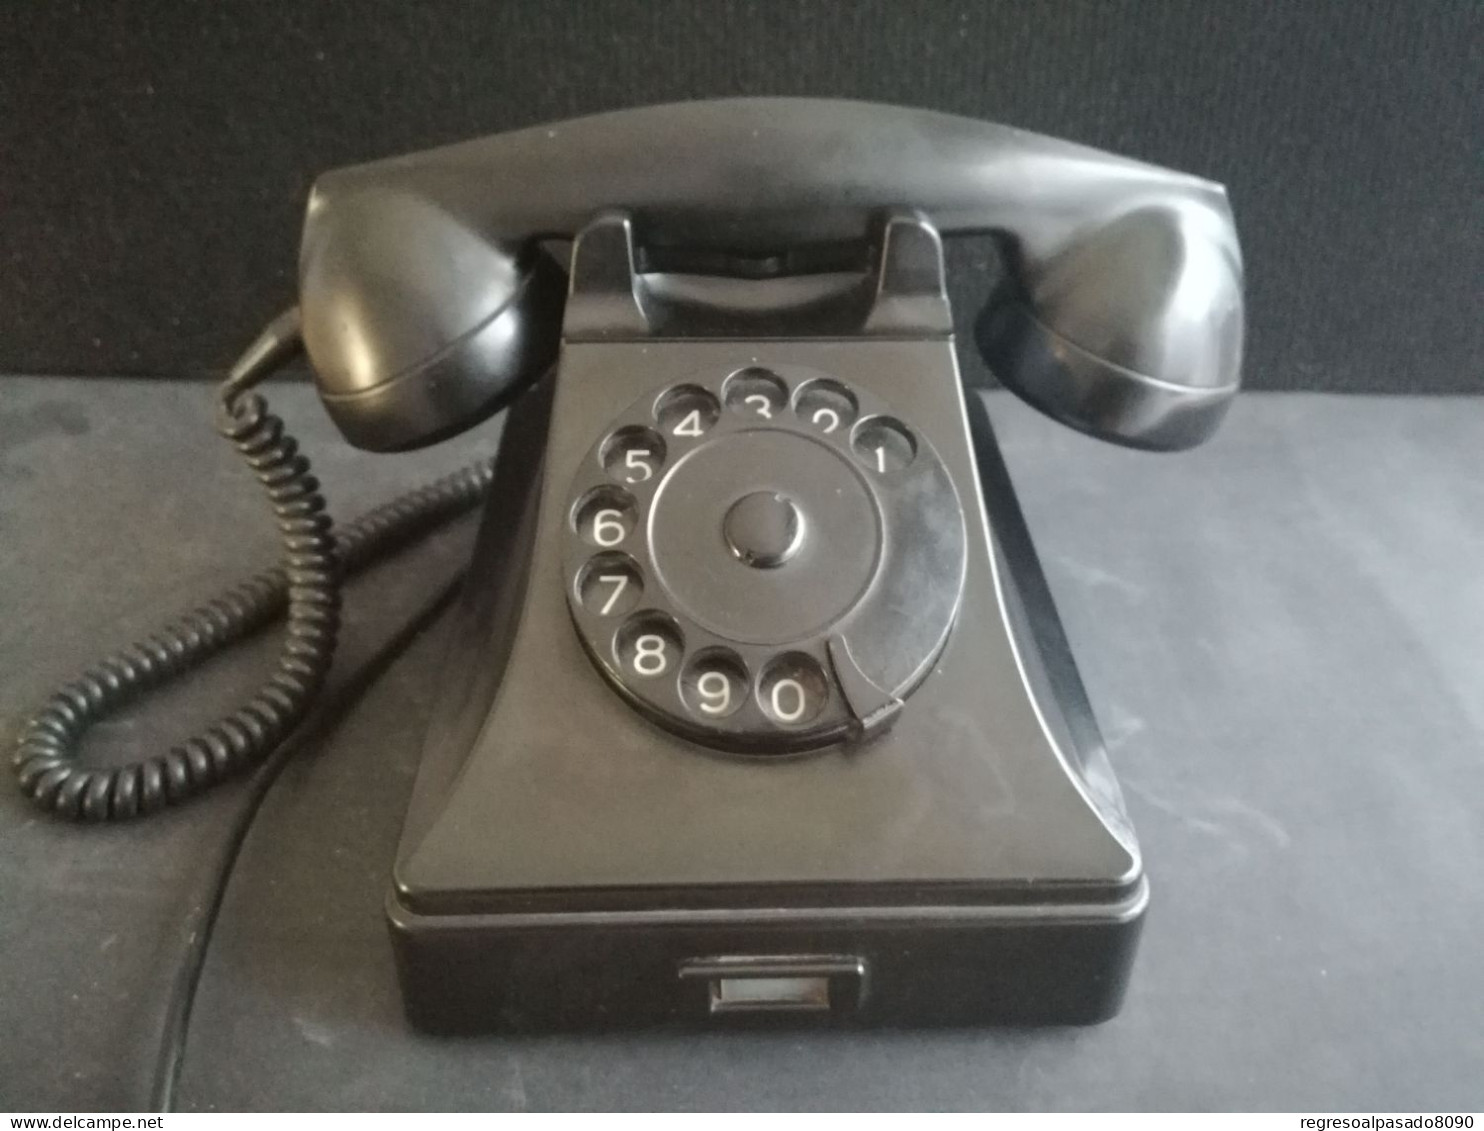 Teléfono Baquelita Negro De Los Años 60. Año 1963 Téléphone Telephone Phone - Telephony